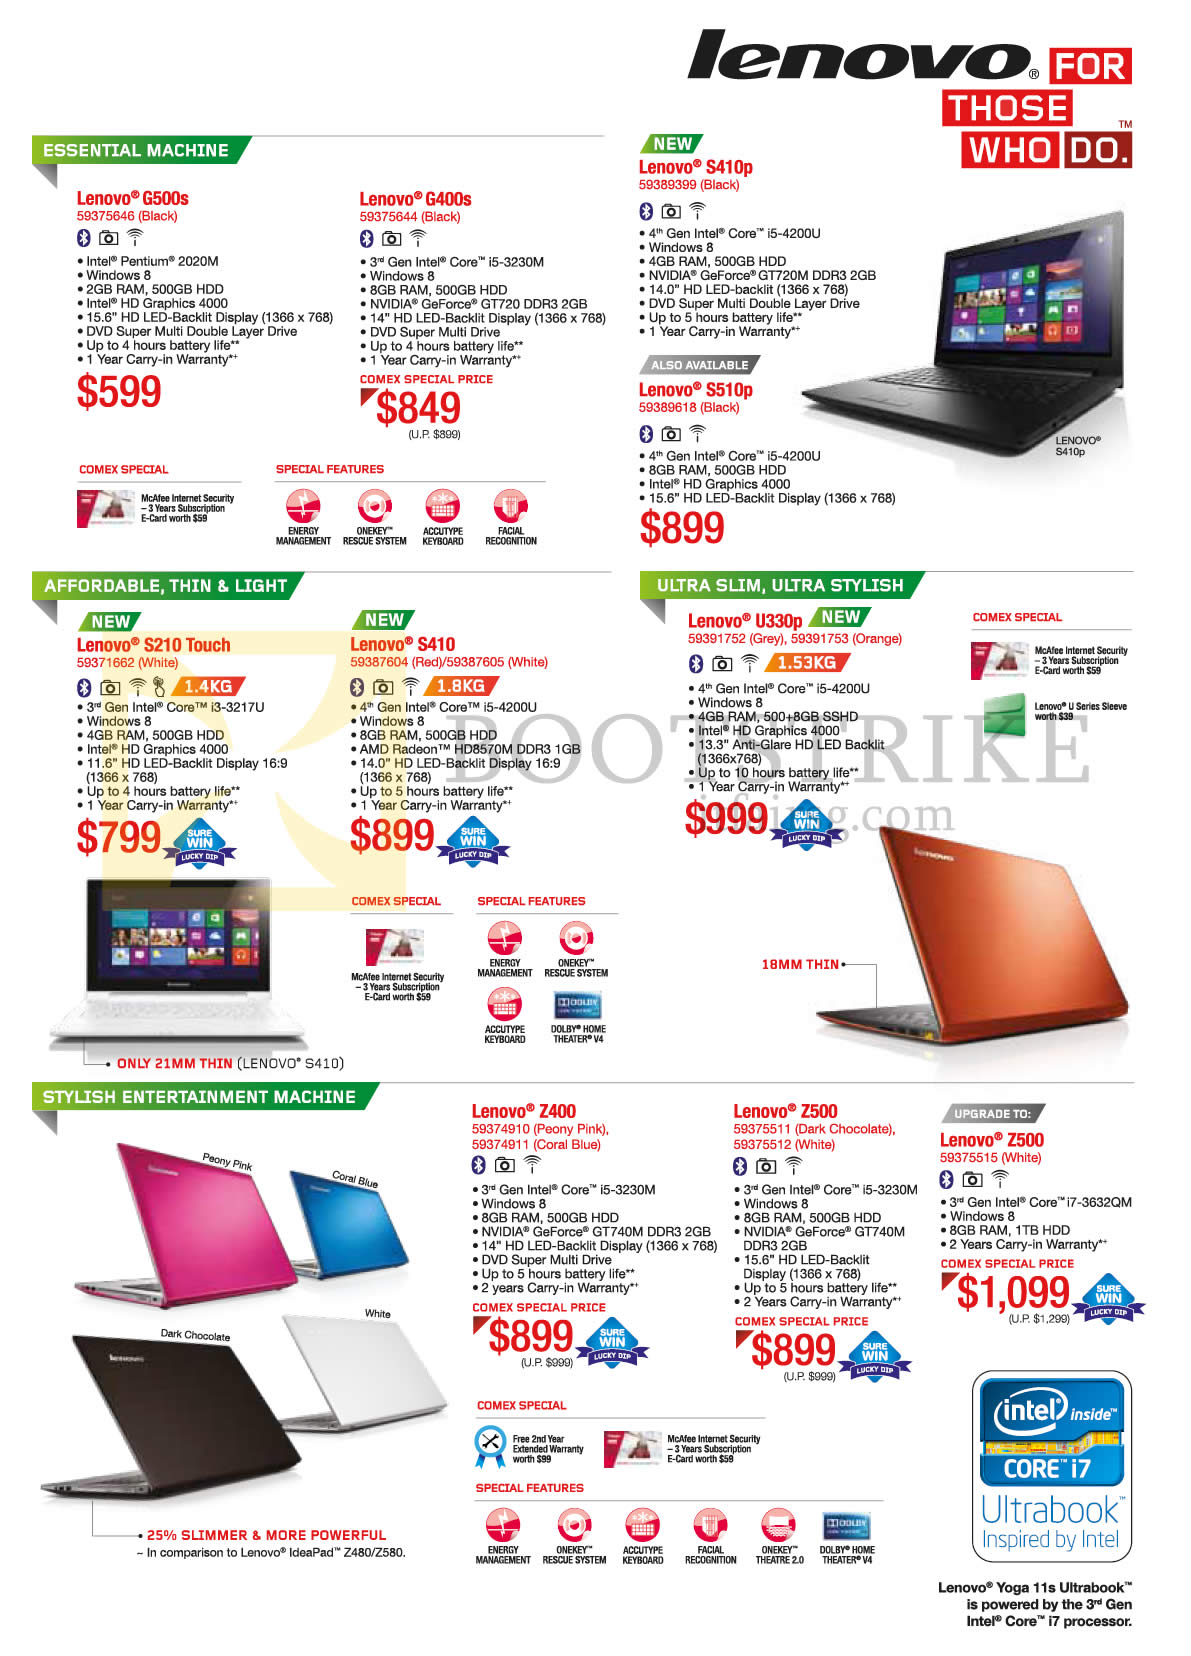 COMEX 2013 price list image brochure of Lenovo Notebooks G500s, G400s, S410p, S510p, S210 Touch, S410, U330p, Z400, Z500